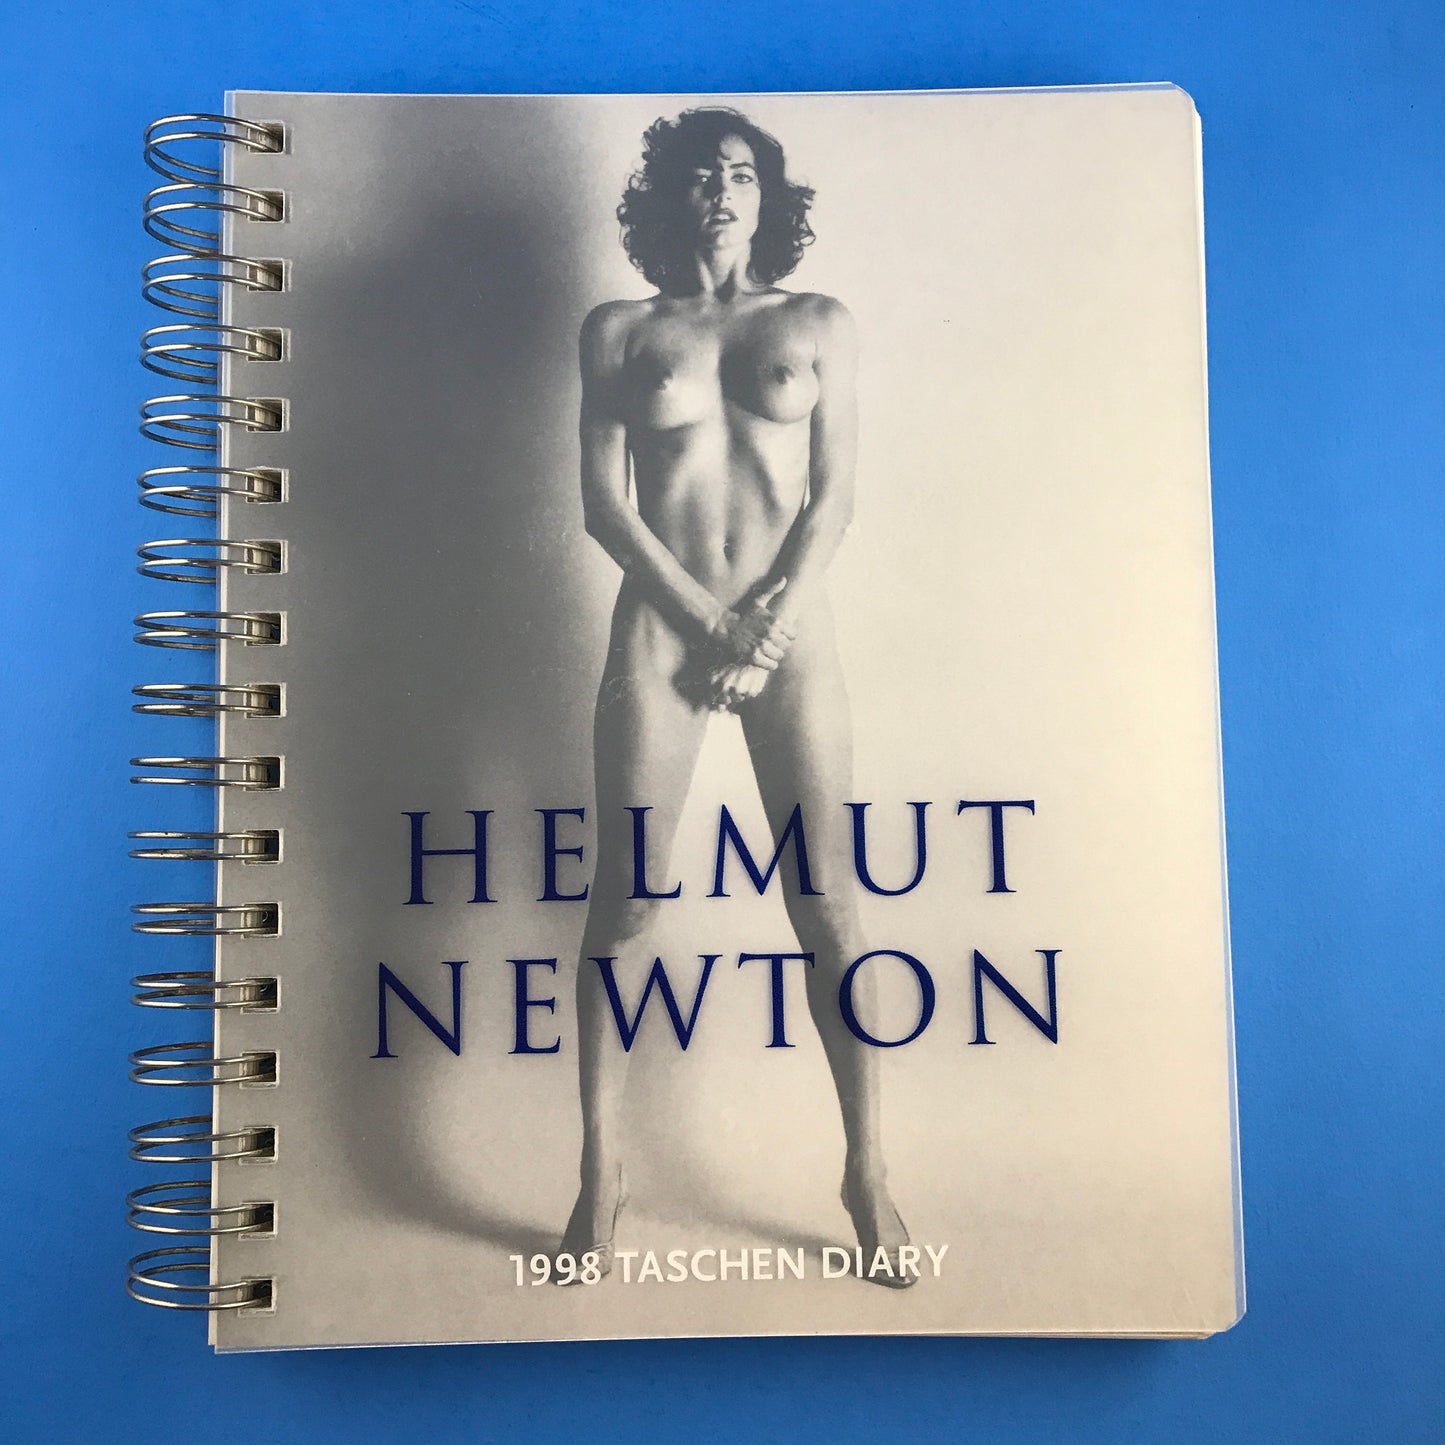 Helmut Newton 1998 Taschen Diary